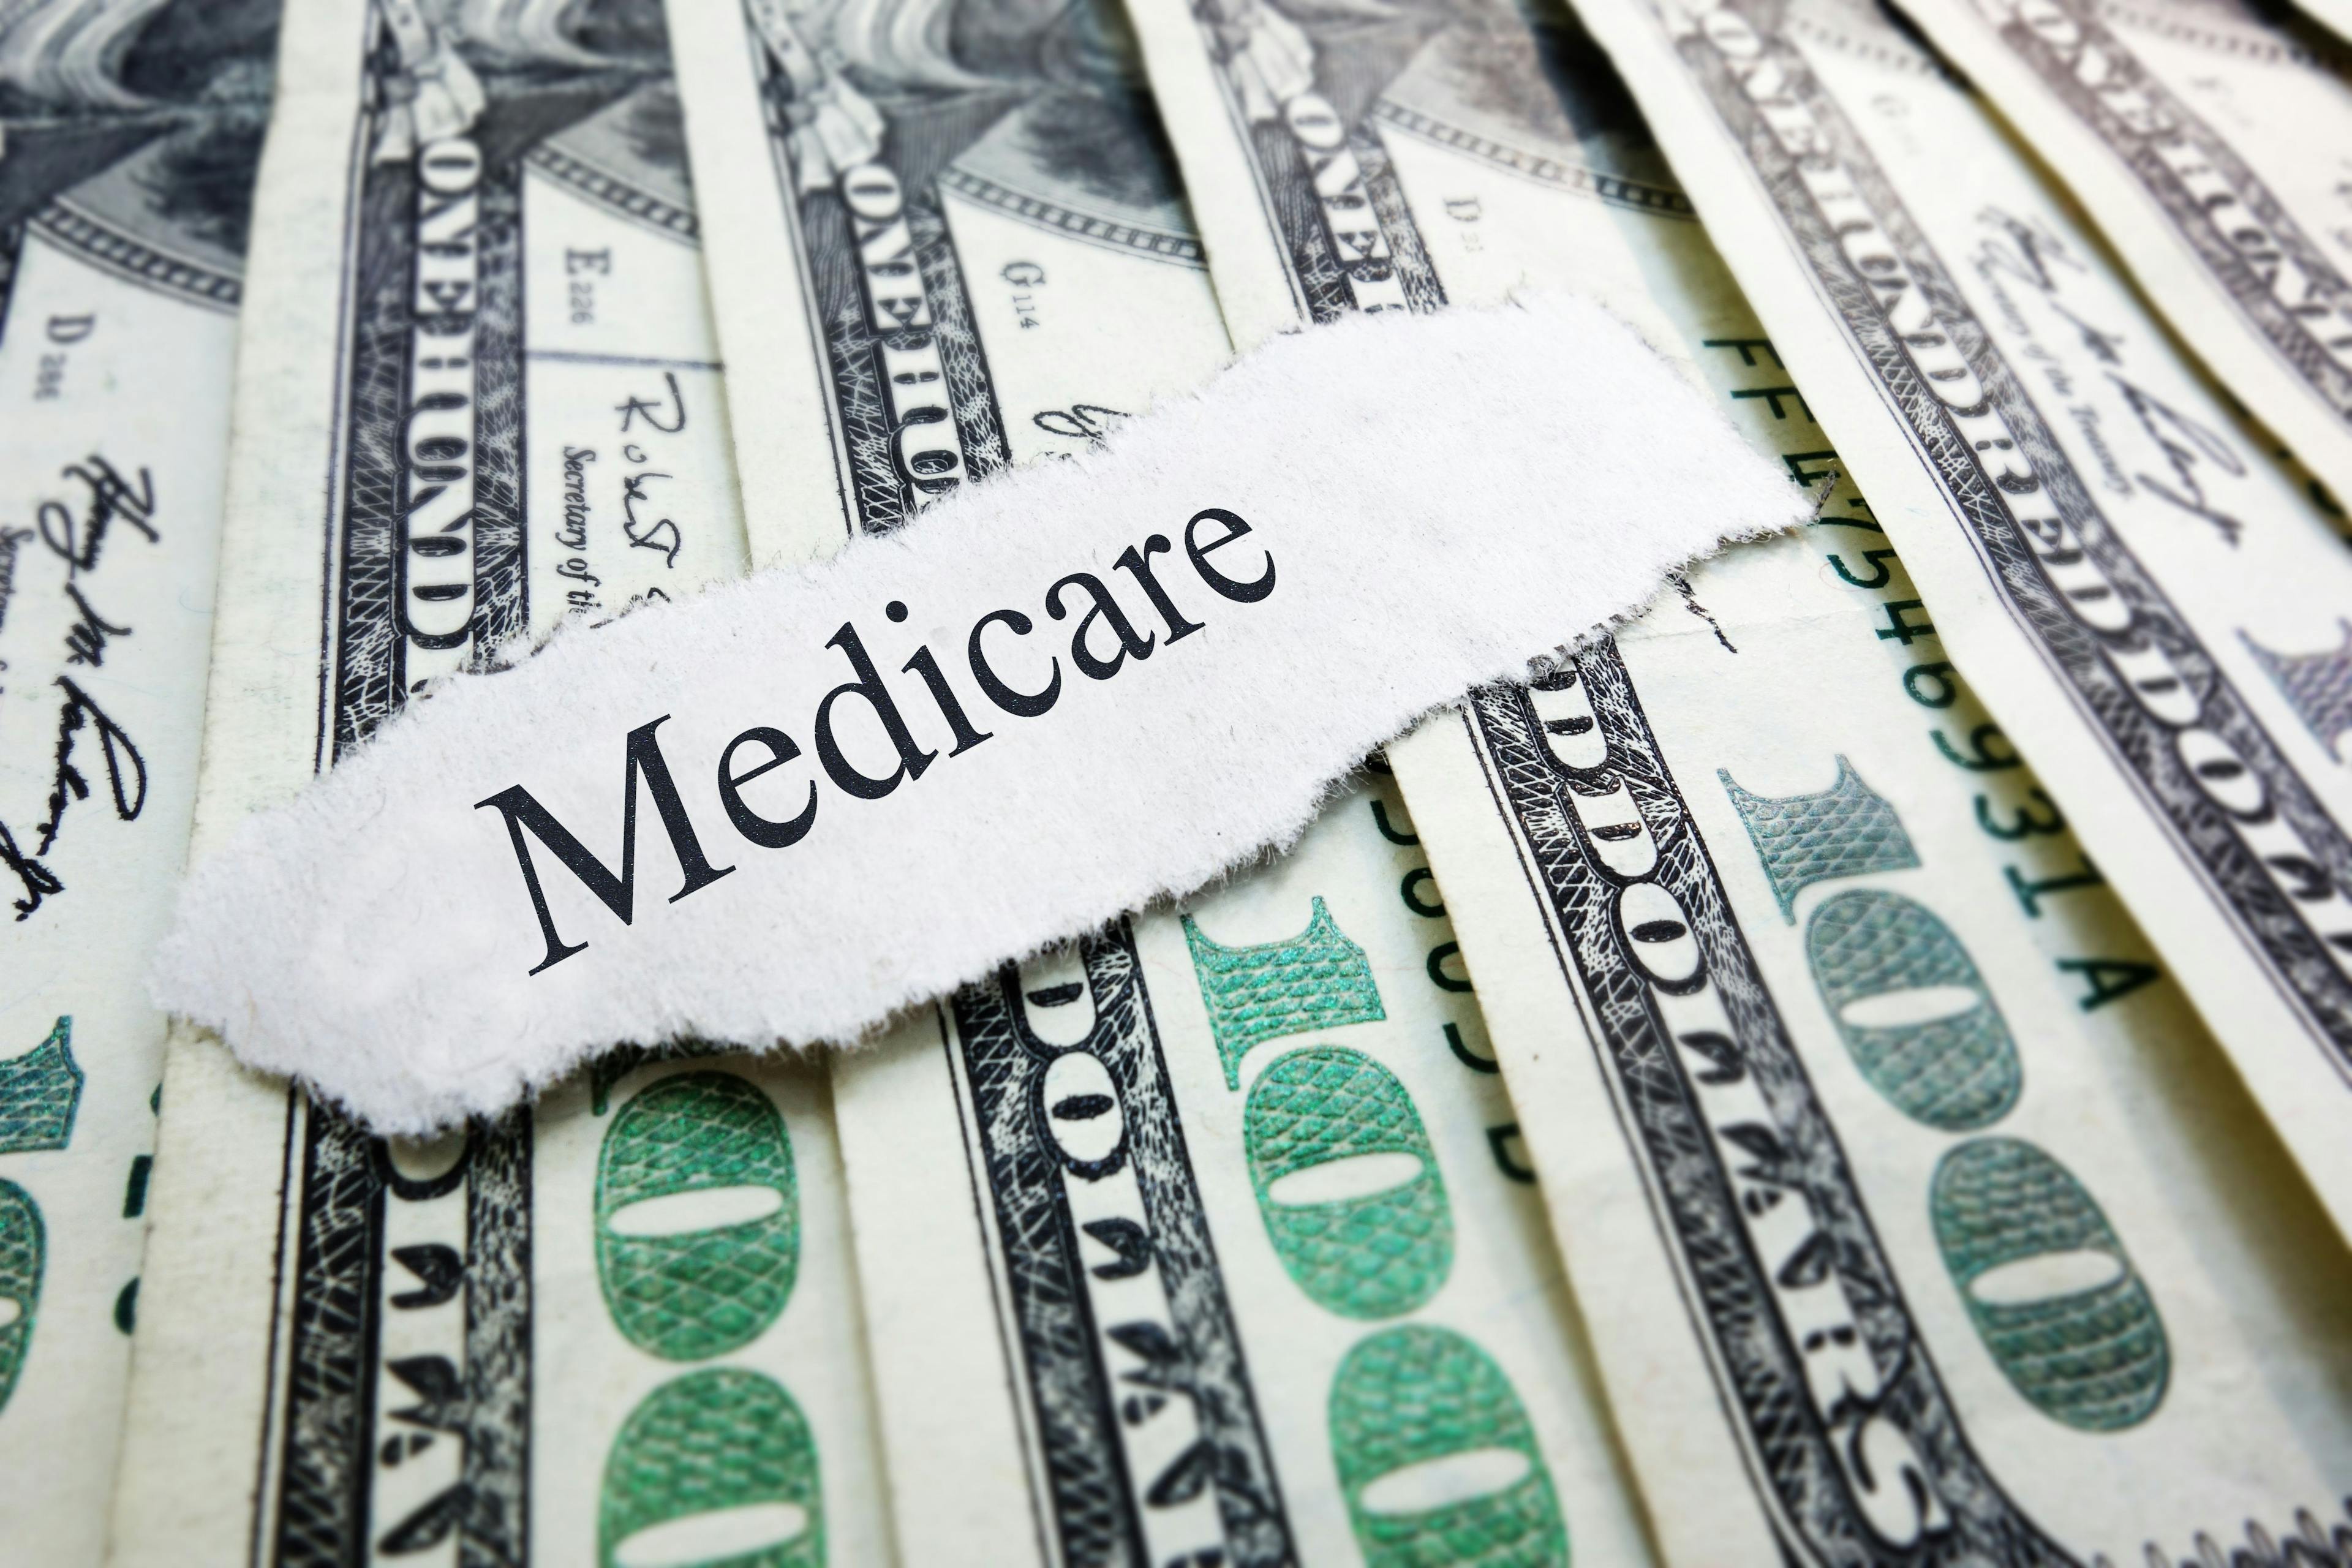 Medicare text on $100 bills ©zimmytws-stock.adobe.com